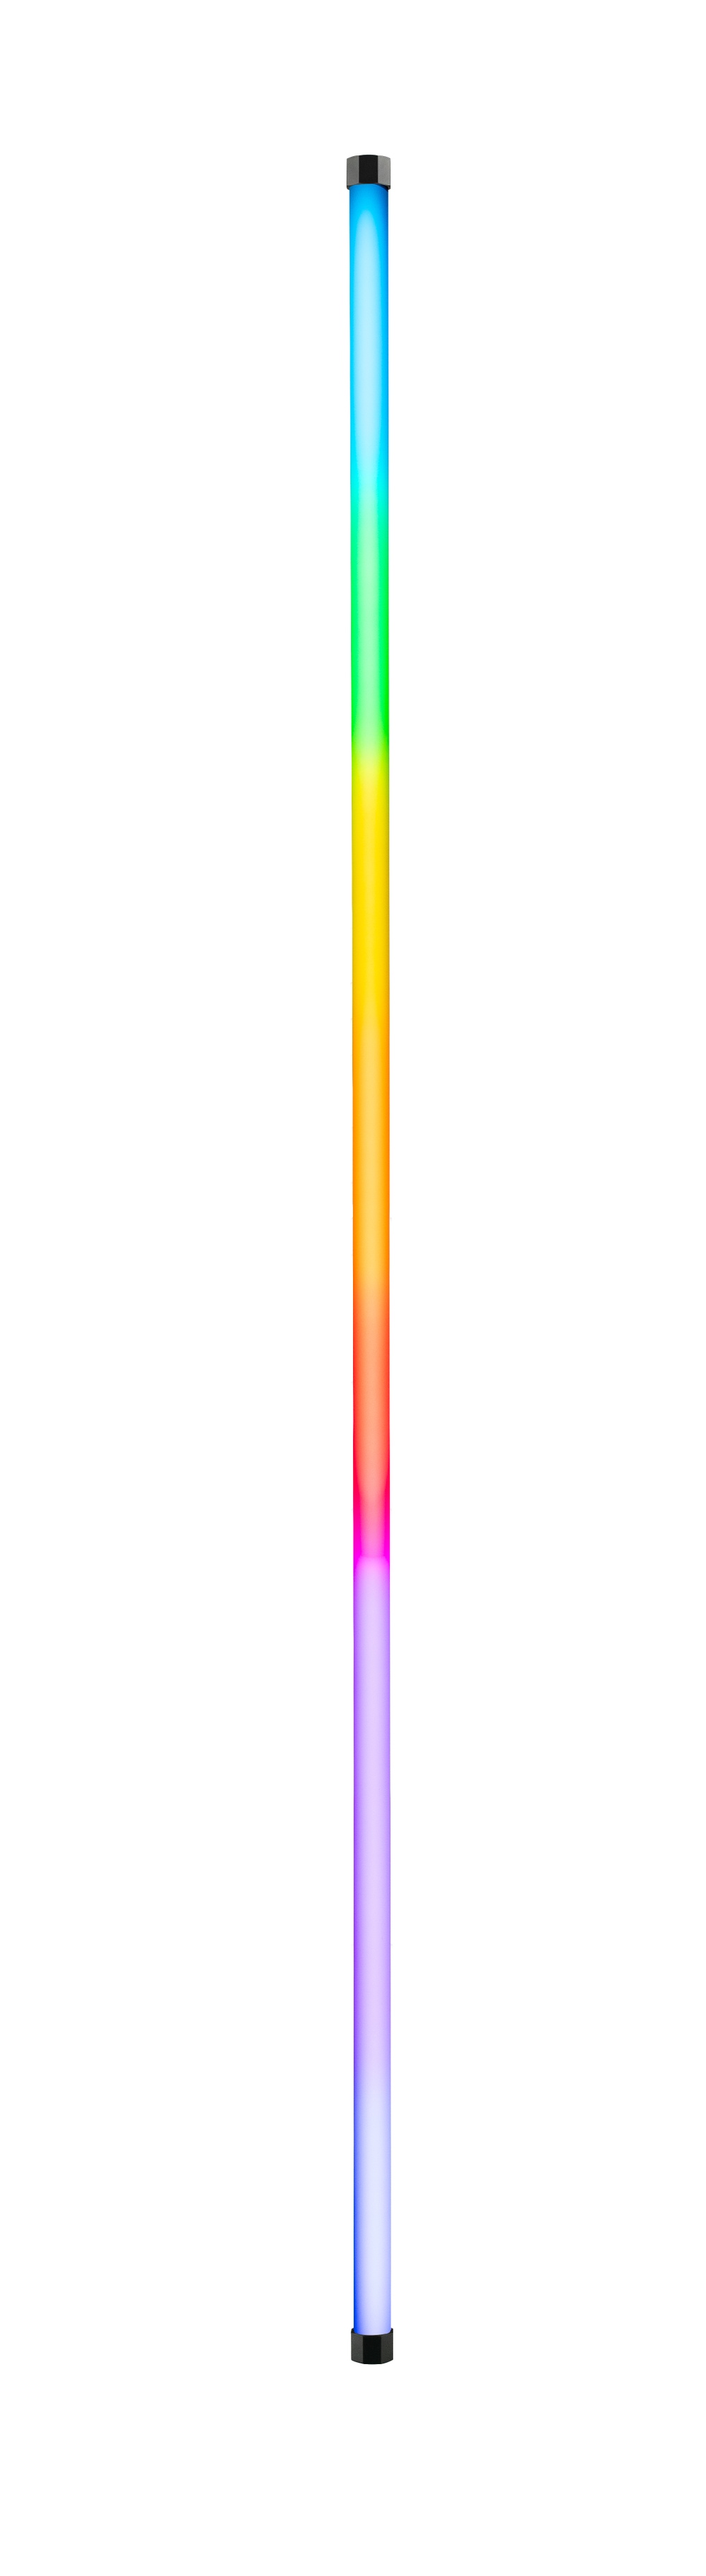 PavoTube II 60X-Light effect 09.jpg